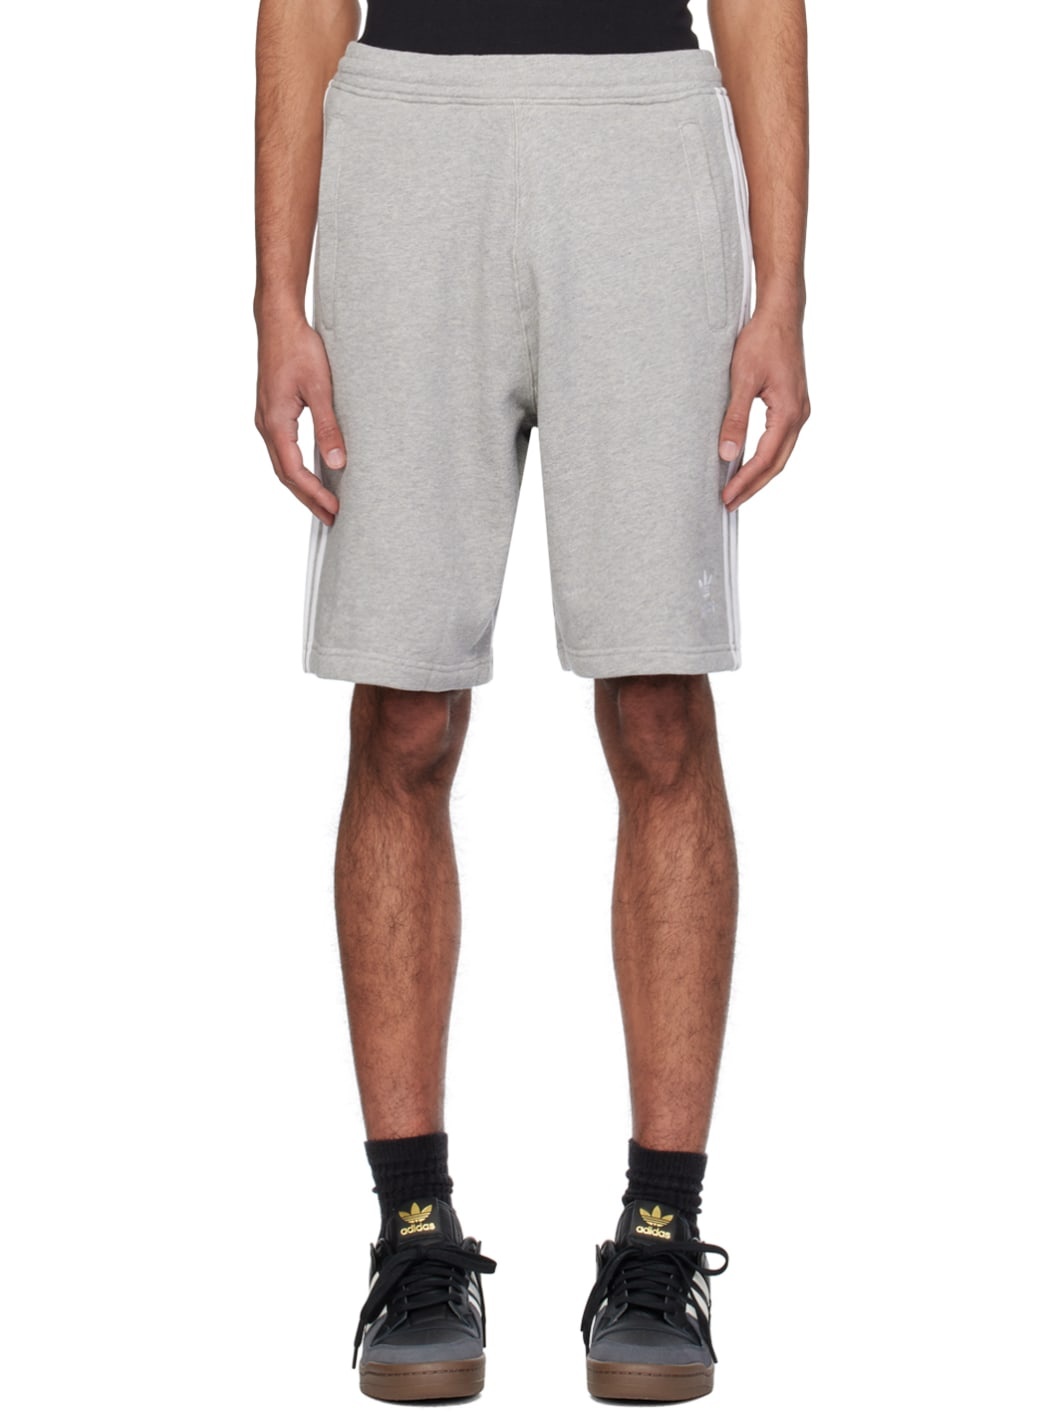 Gray 3-Stripes Shorts - 1